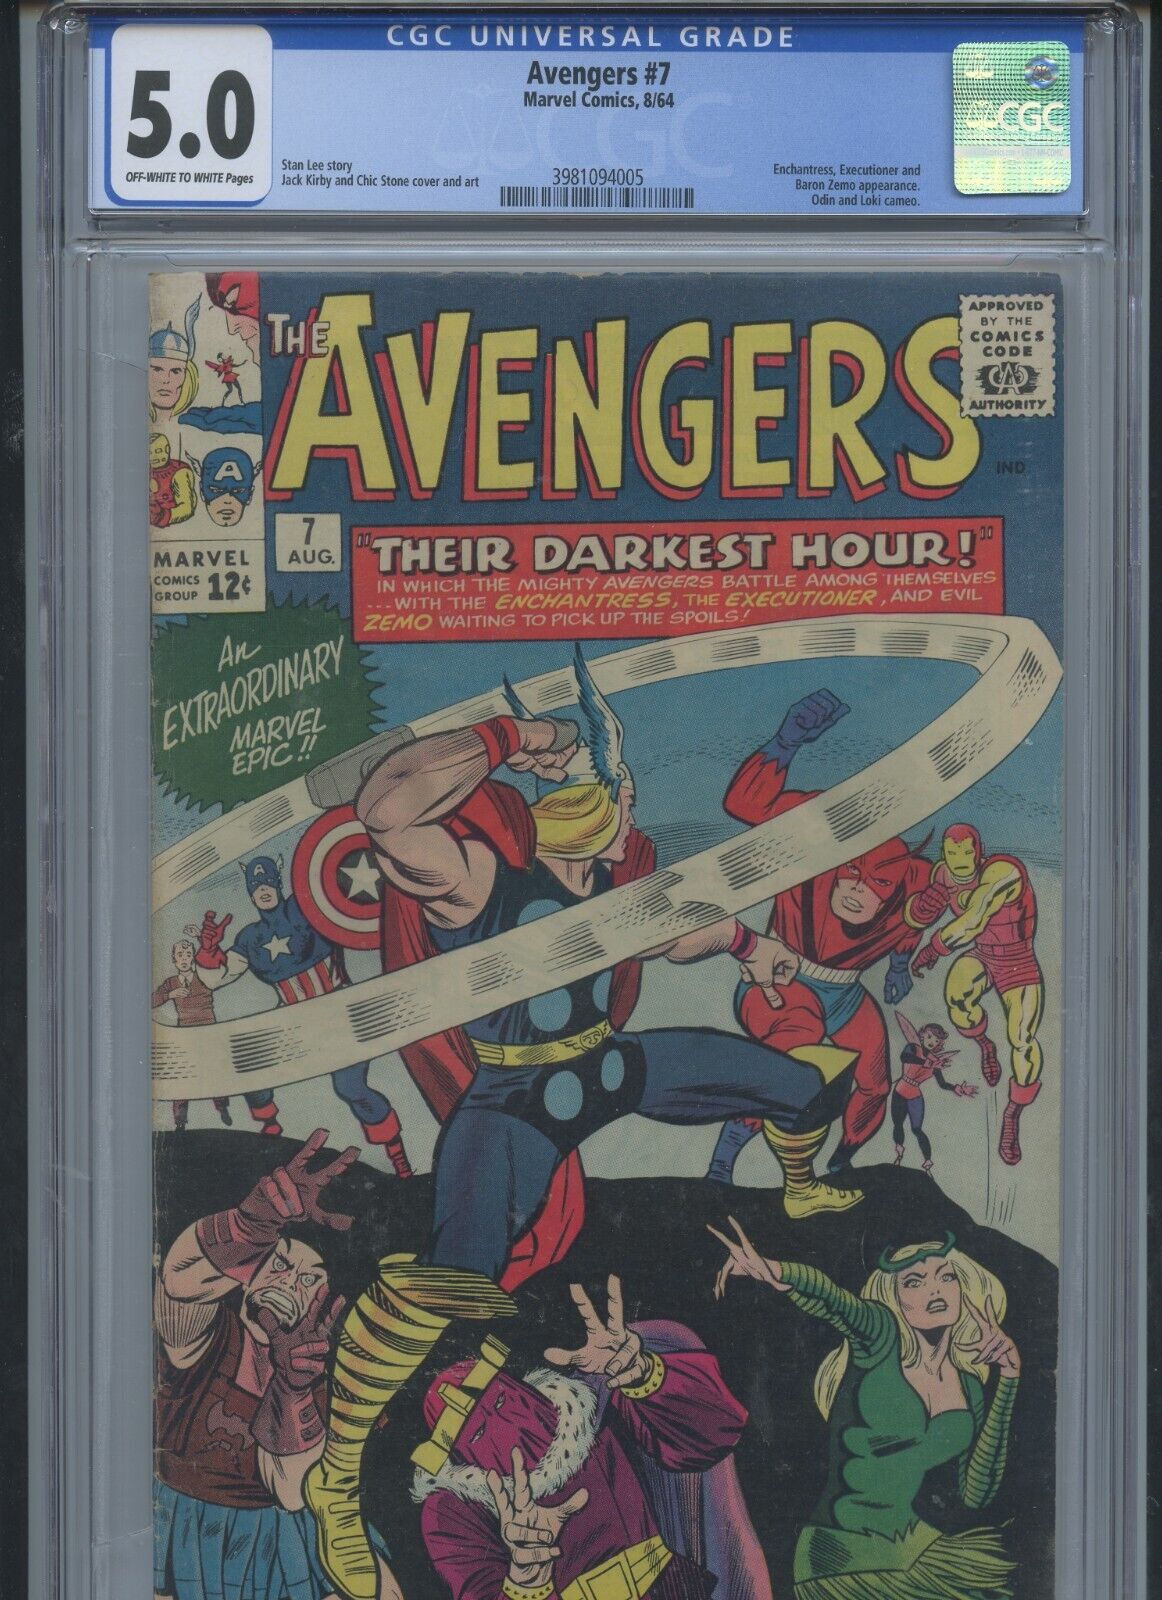 Avengers #7 1964 CGC 5.0 (Stan Lee Story)